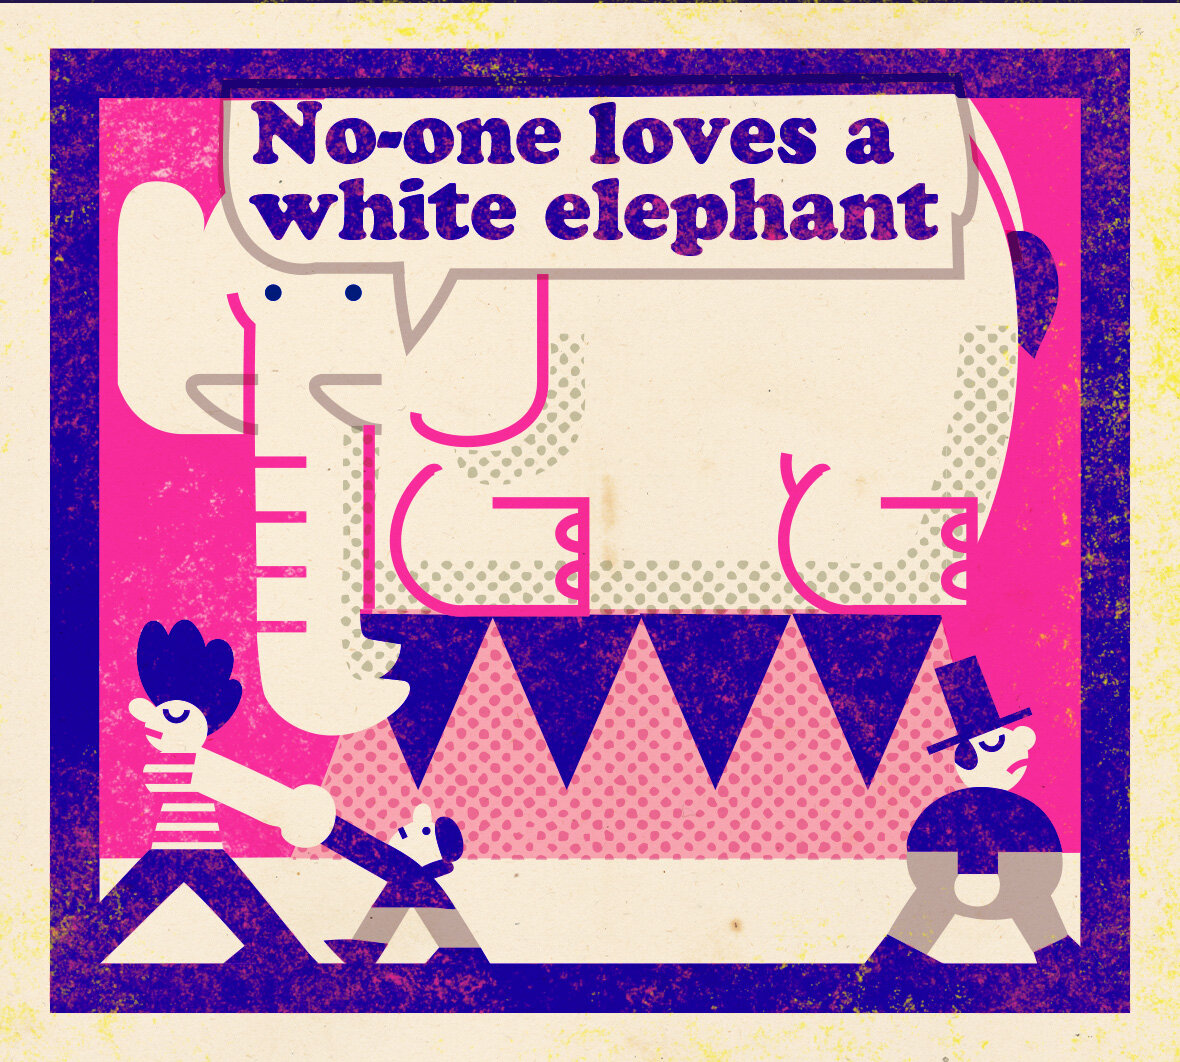 white elephant.jpg